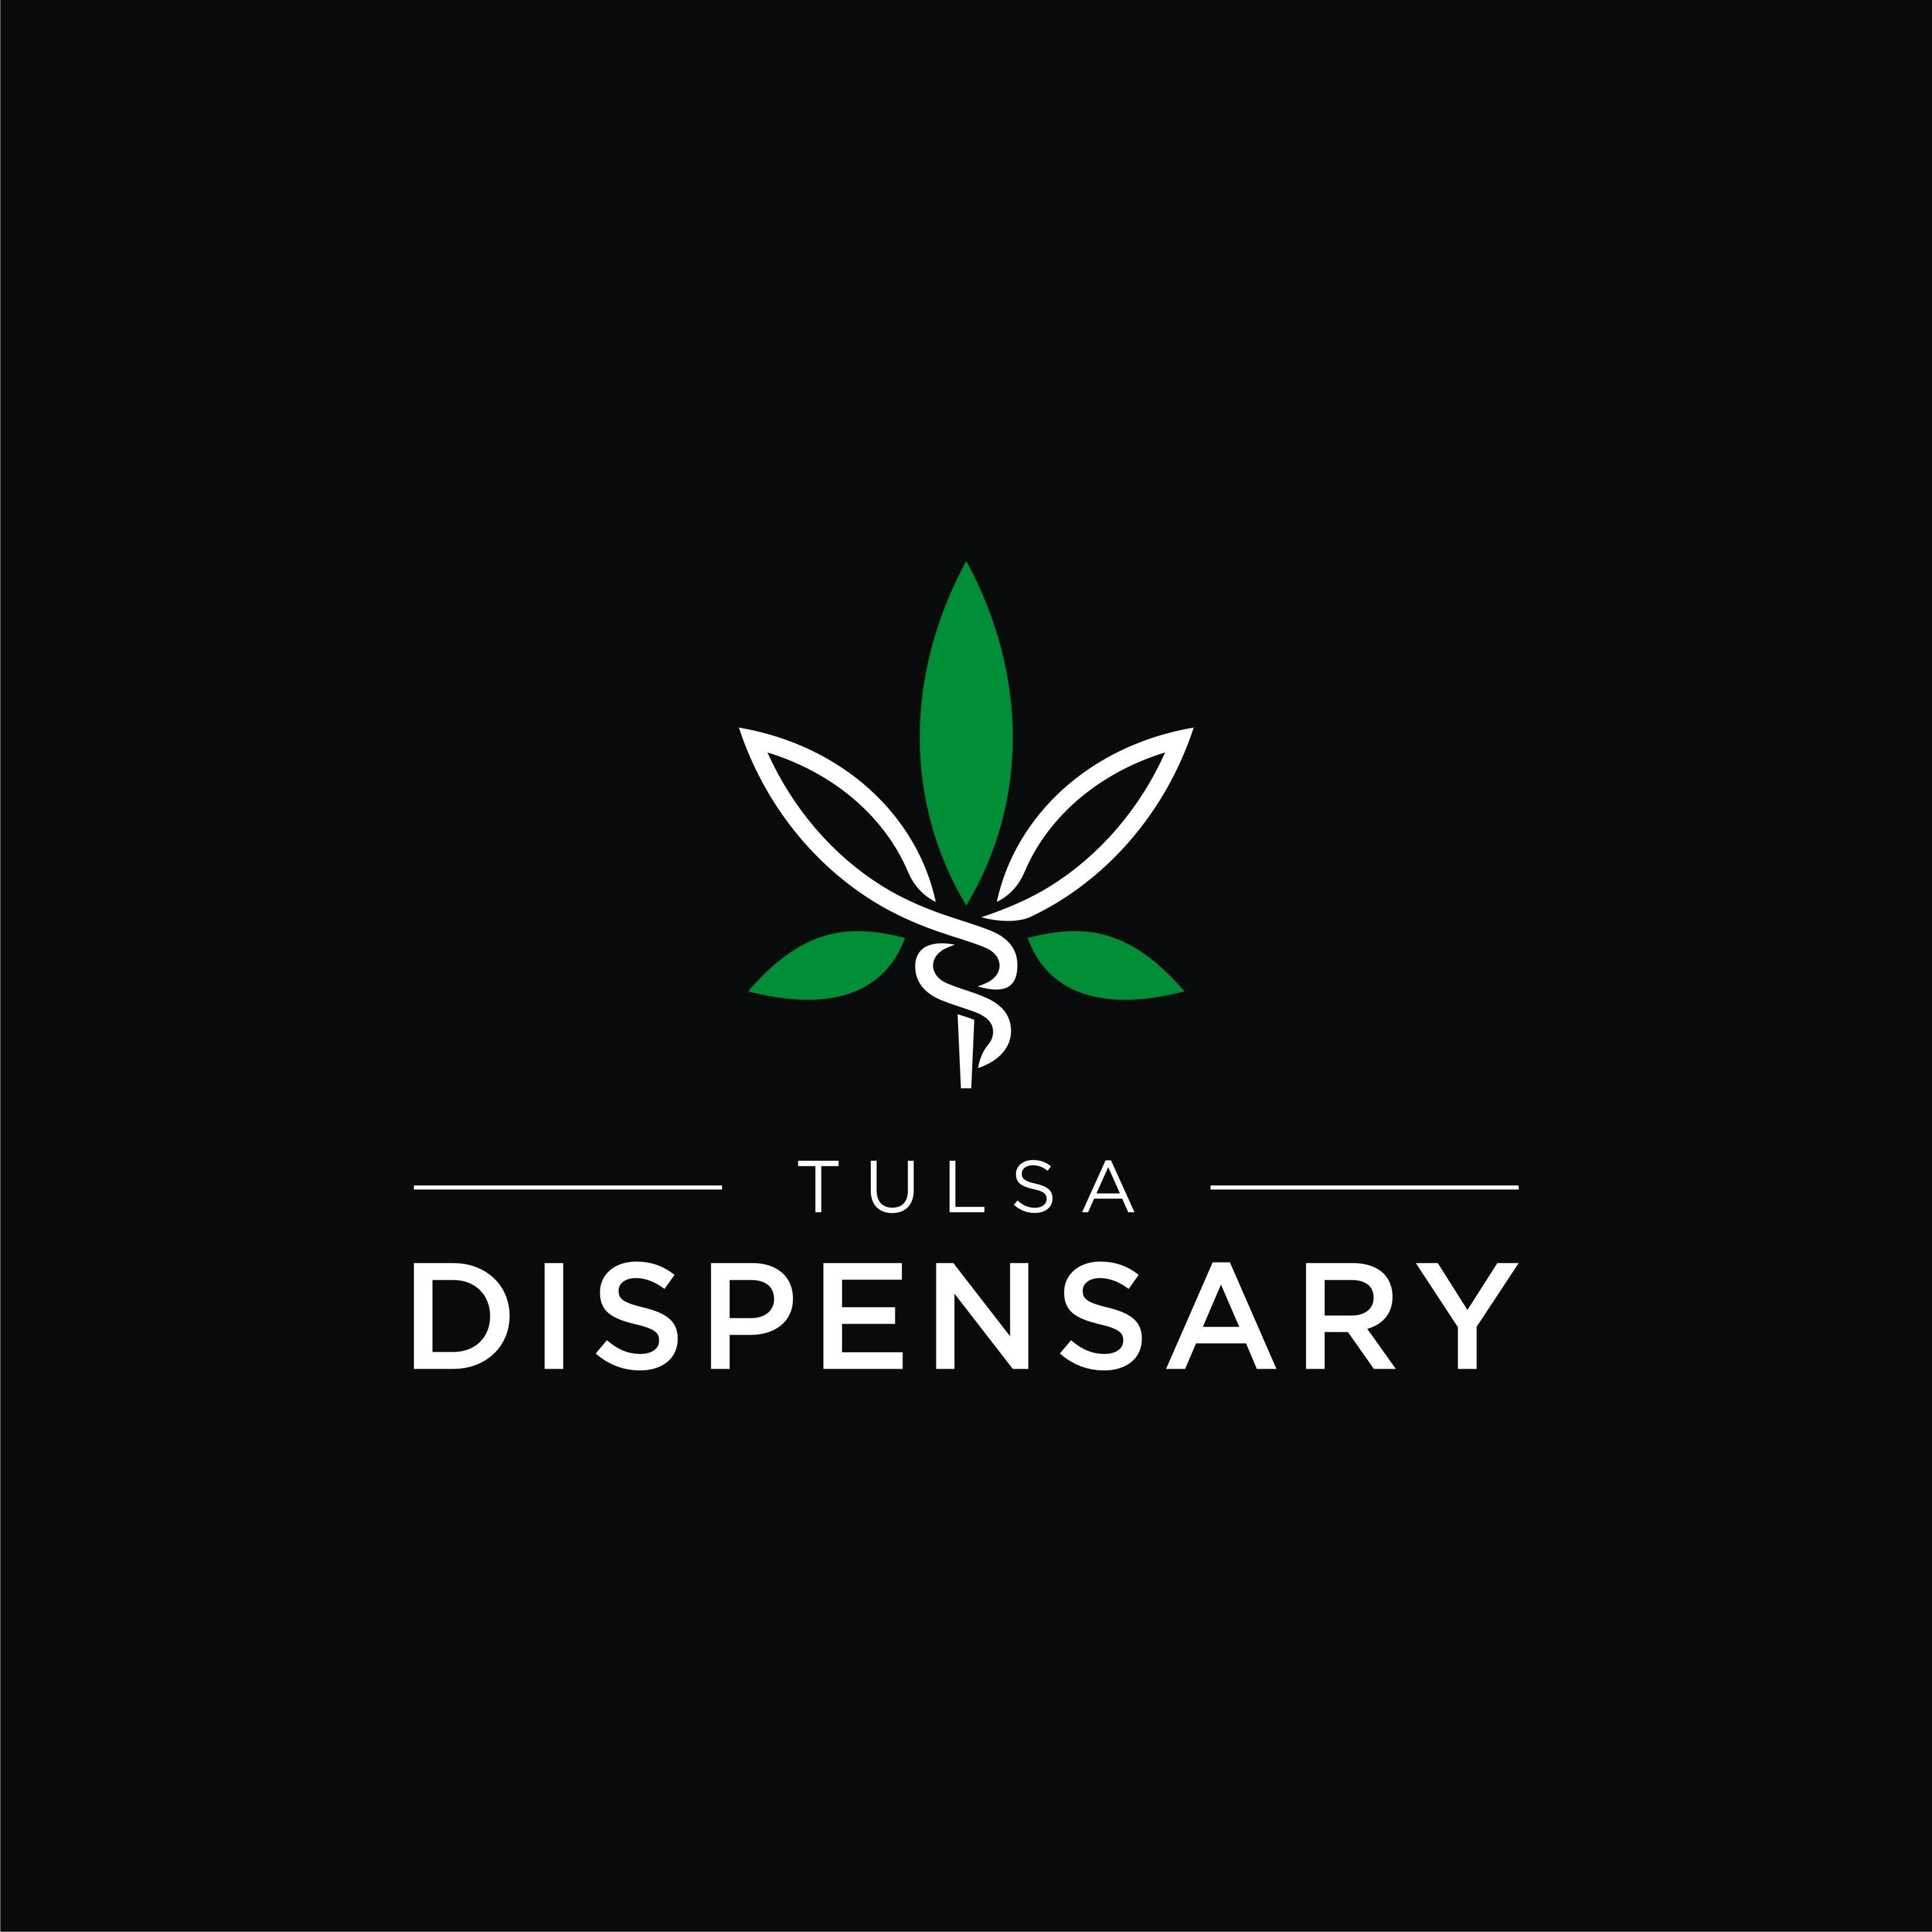 Tulsa Dispensary logo